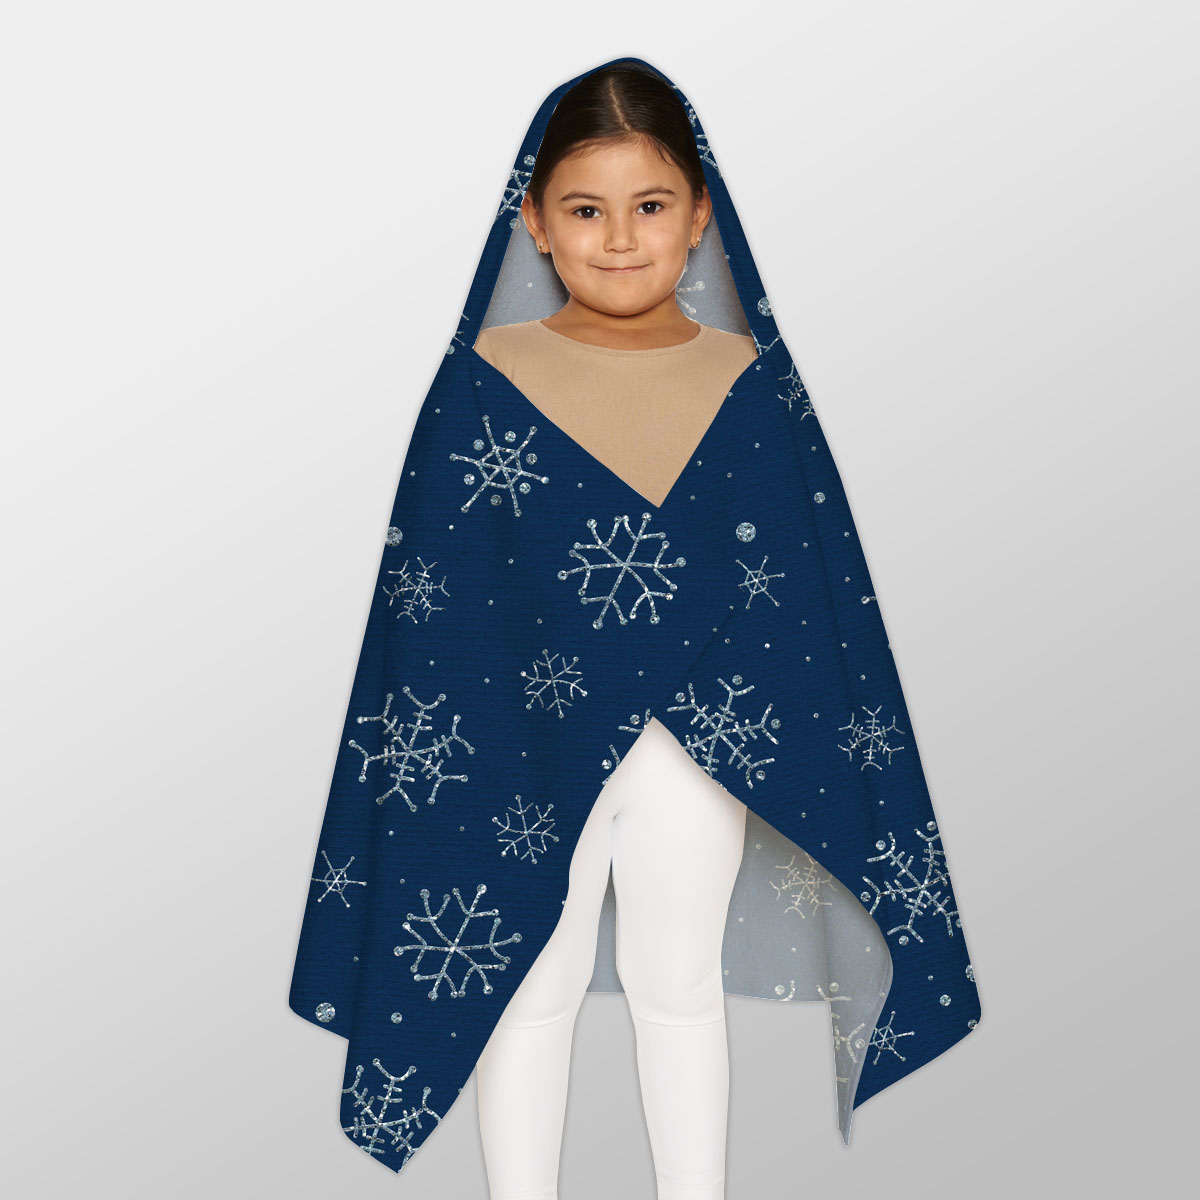 Snowflake, Snowflake Background, Snowflake Pattern 2 Youth Hooded Towel